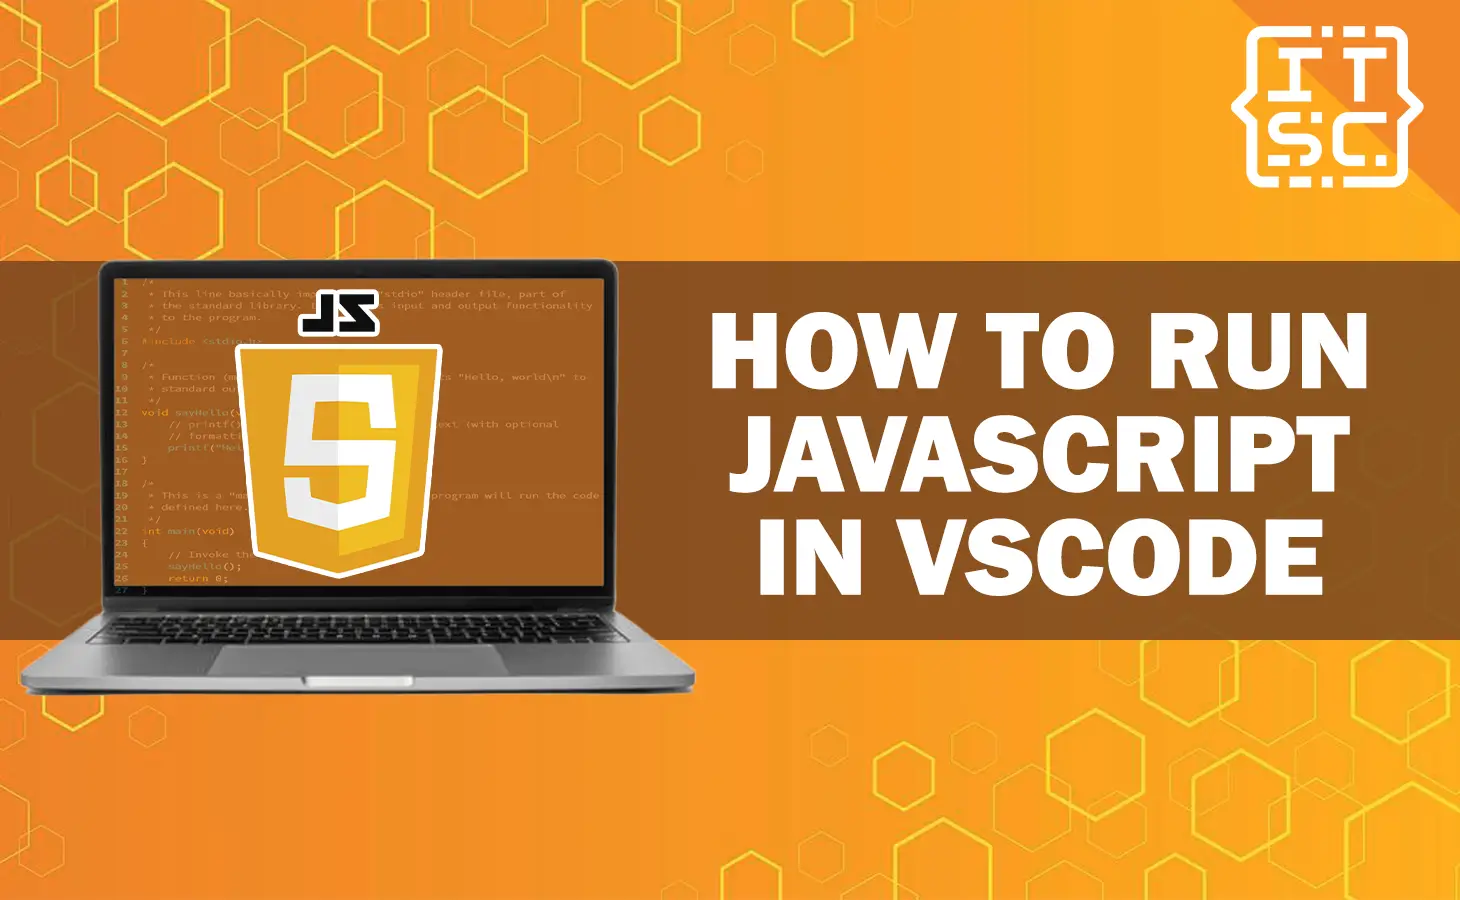 How to run JavaScript in VsCode